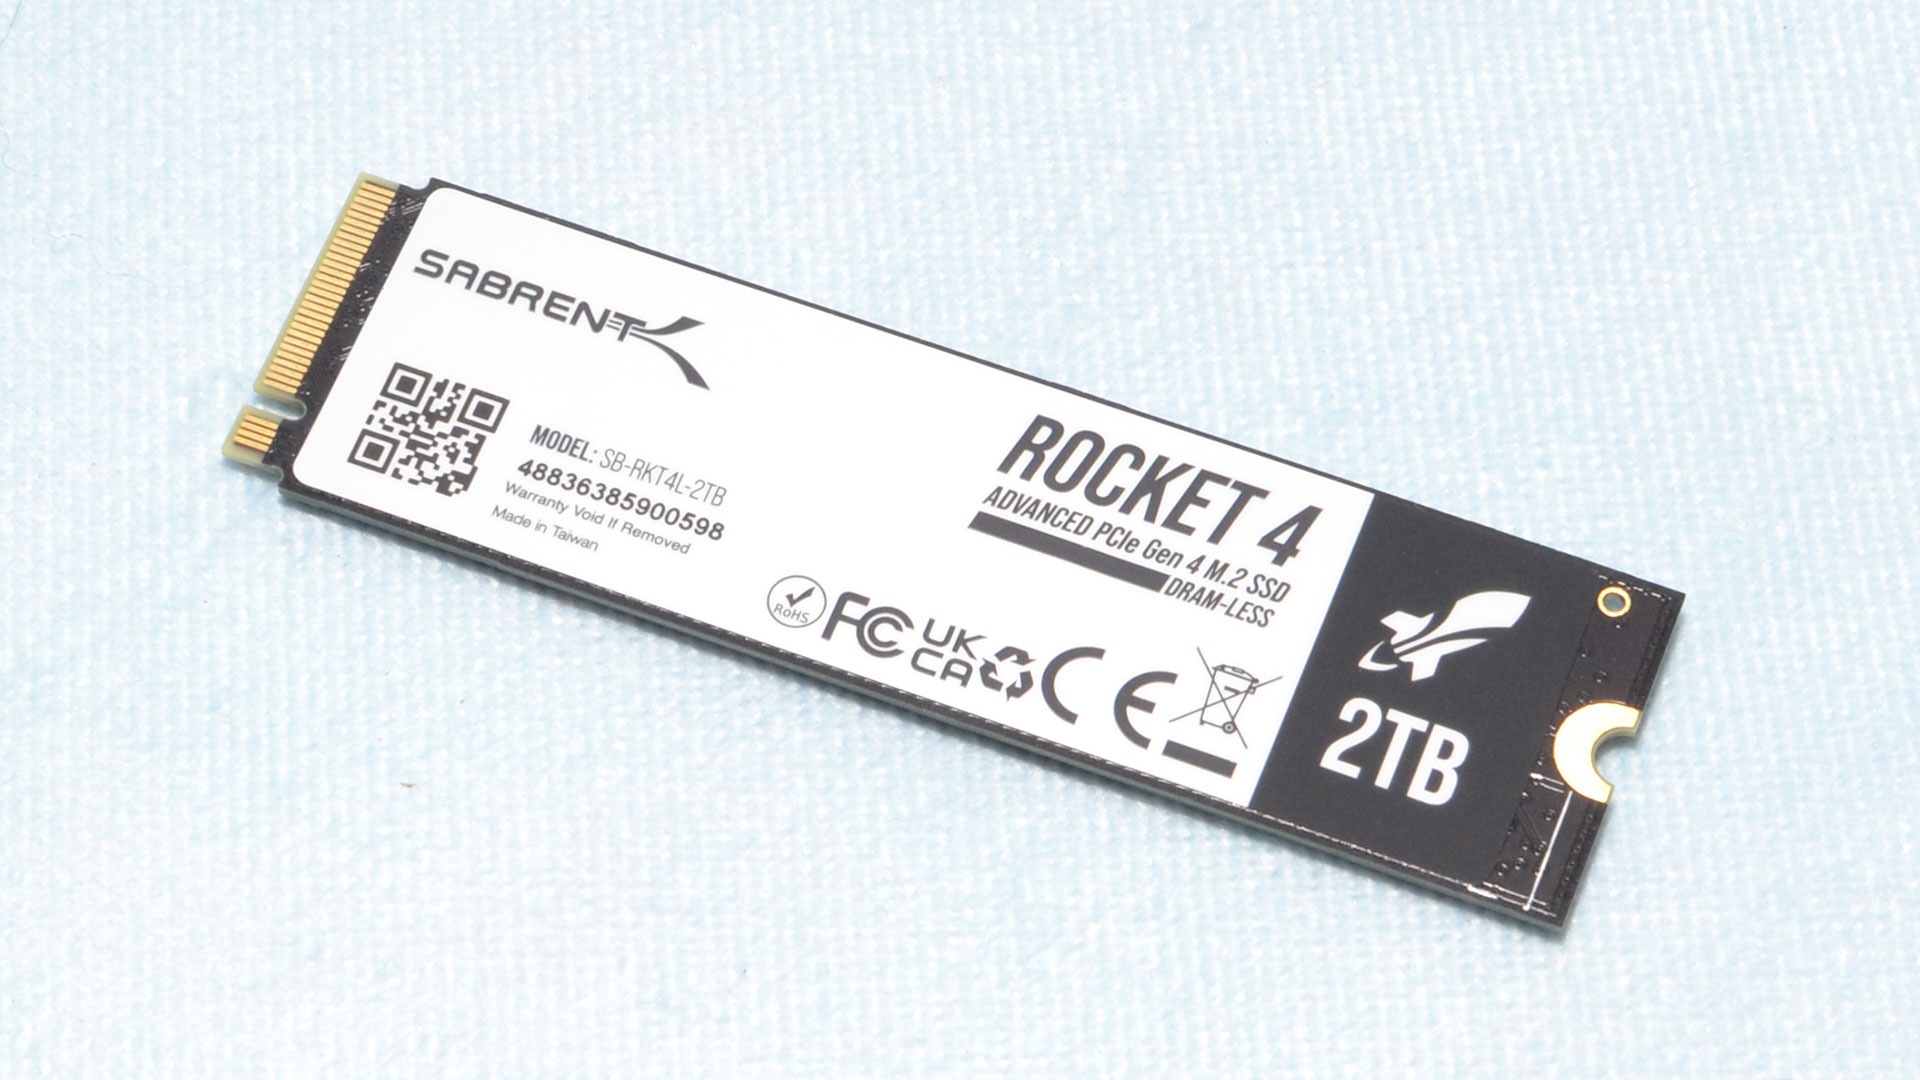 Sabrent Rocket 4 2TB SSD